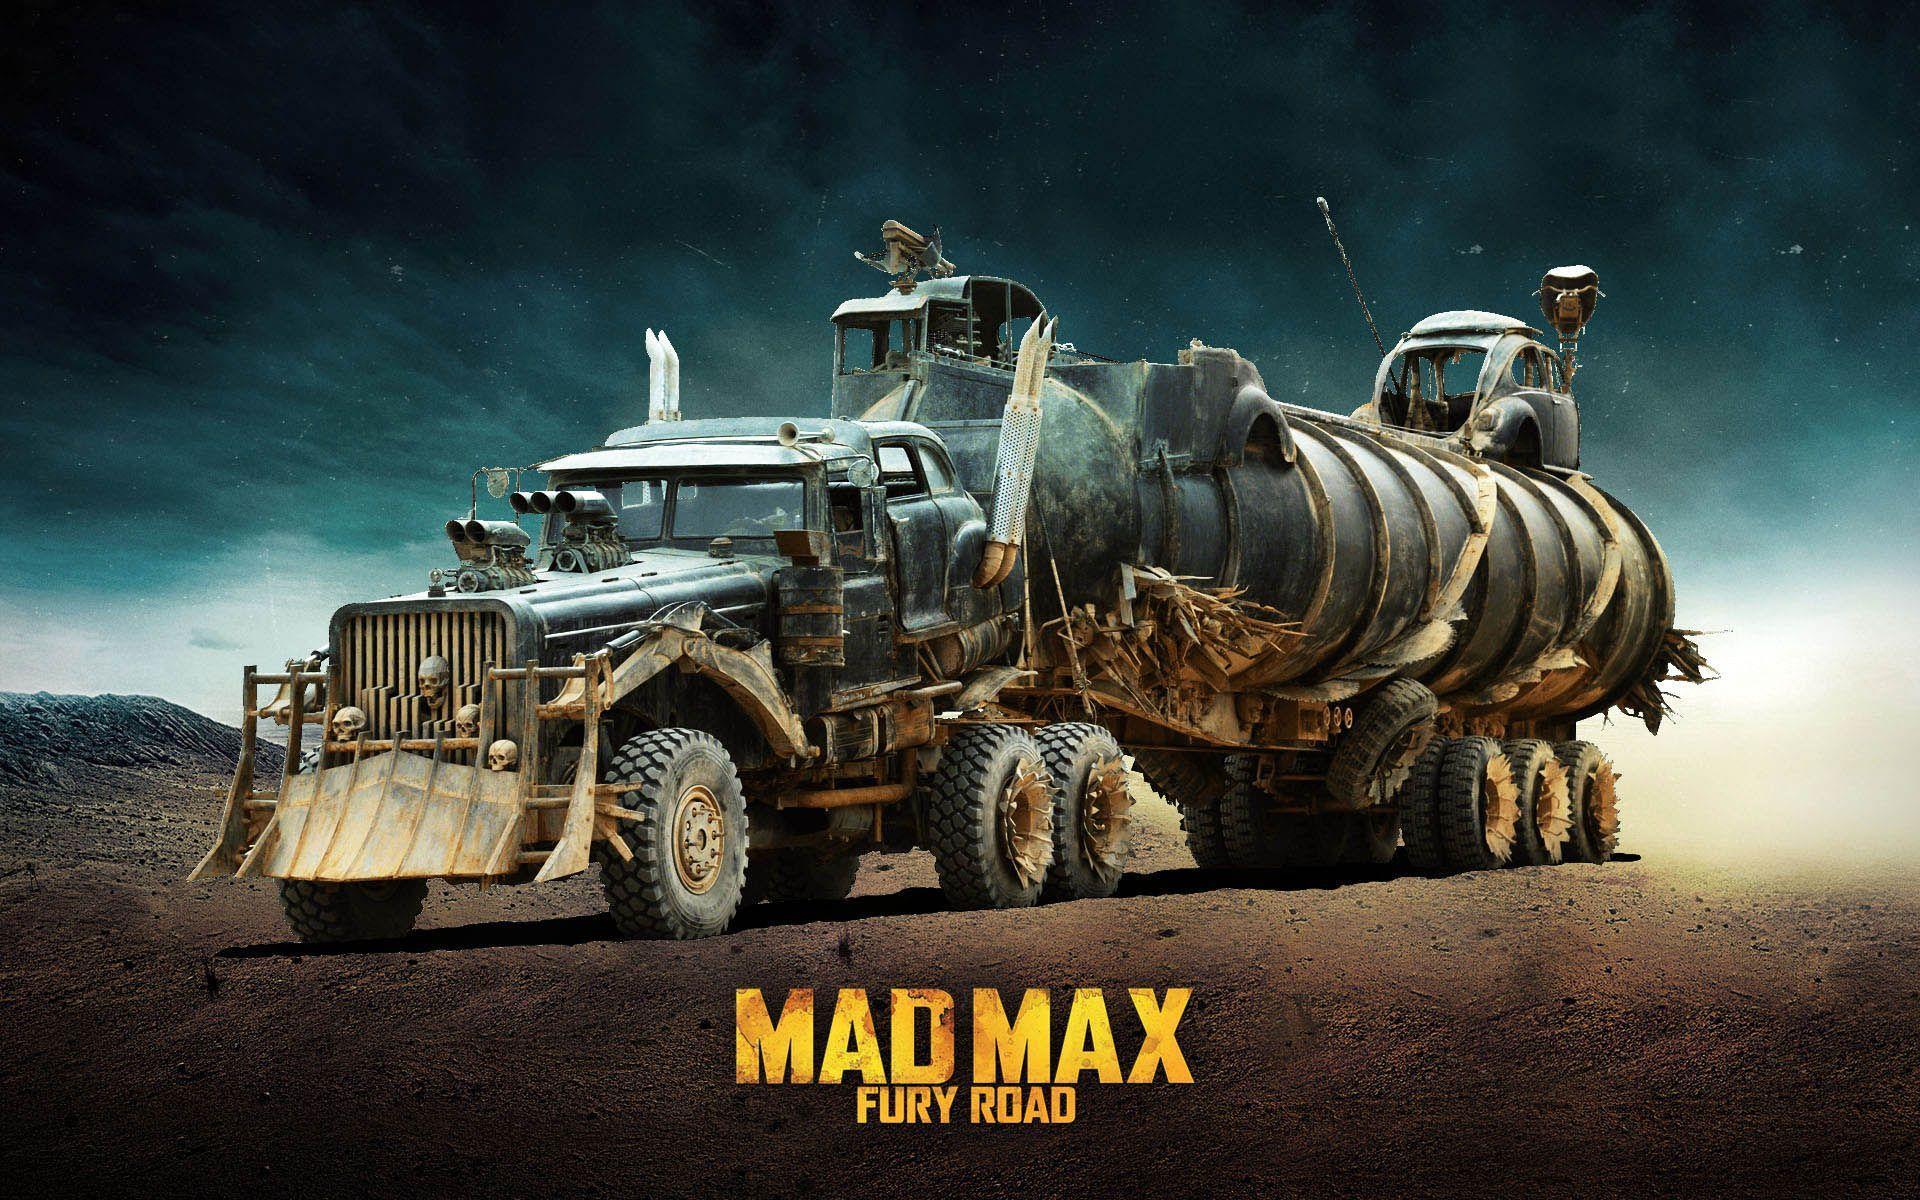 HD Mad Max Fury Road Movie Wallpaper